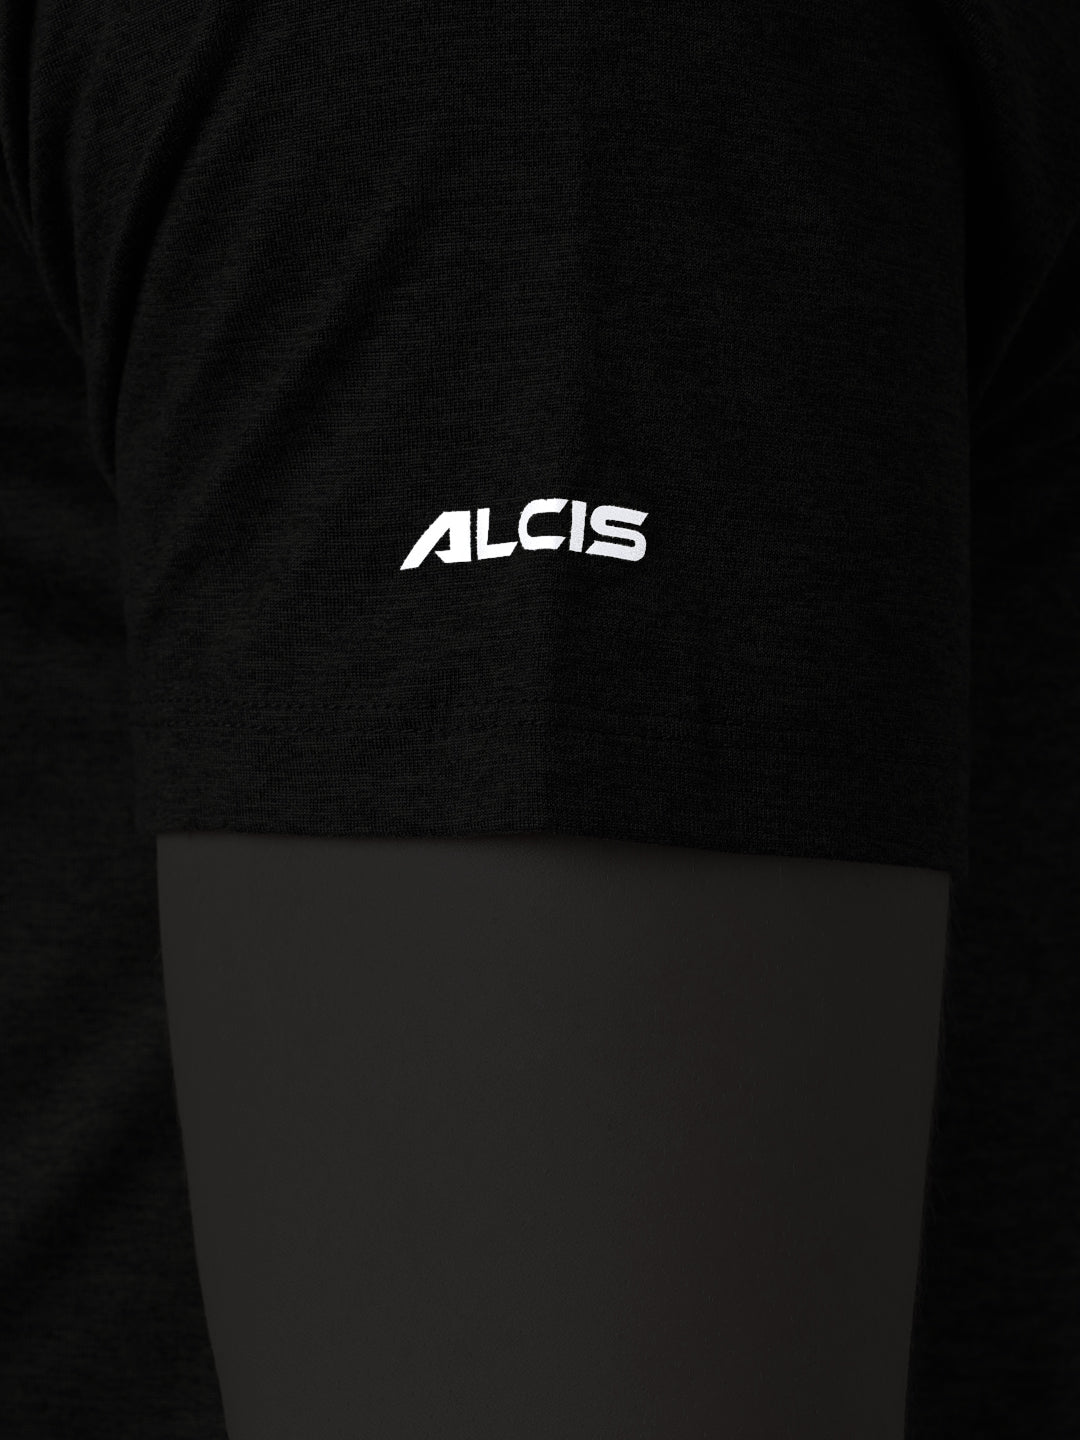 Alcis Men's Olive & Black Anti-Static Drytech+ Slim-Fit Training Tee